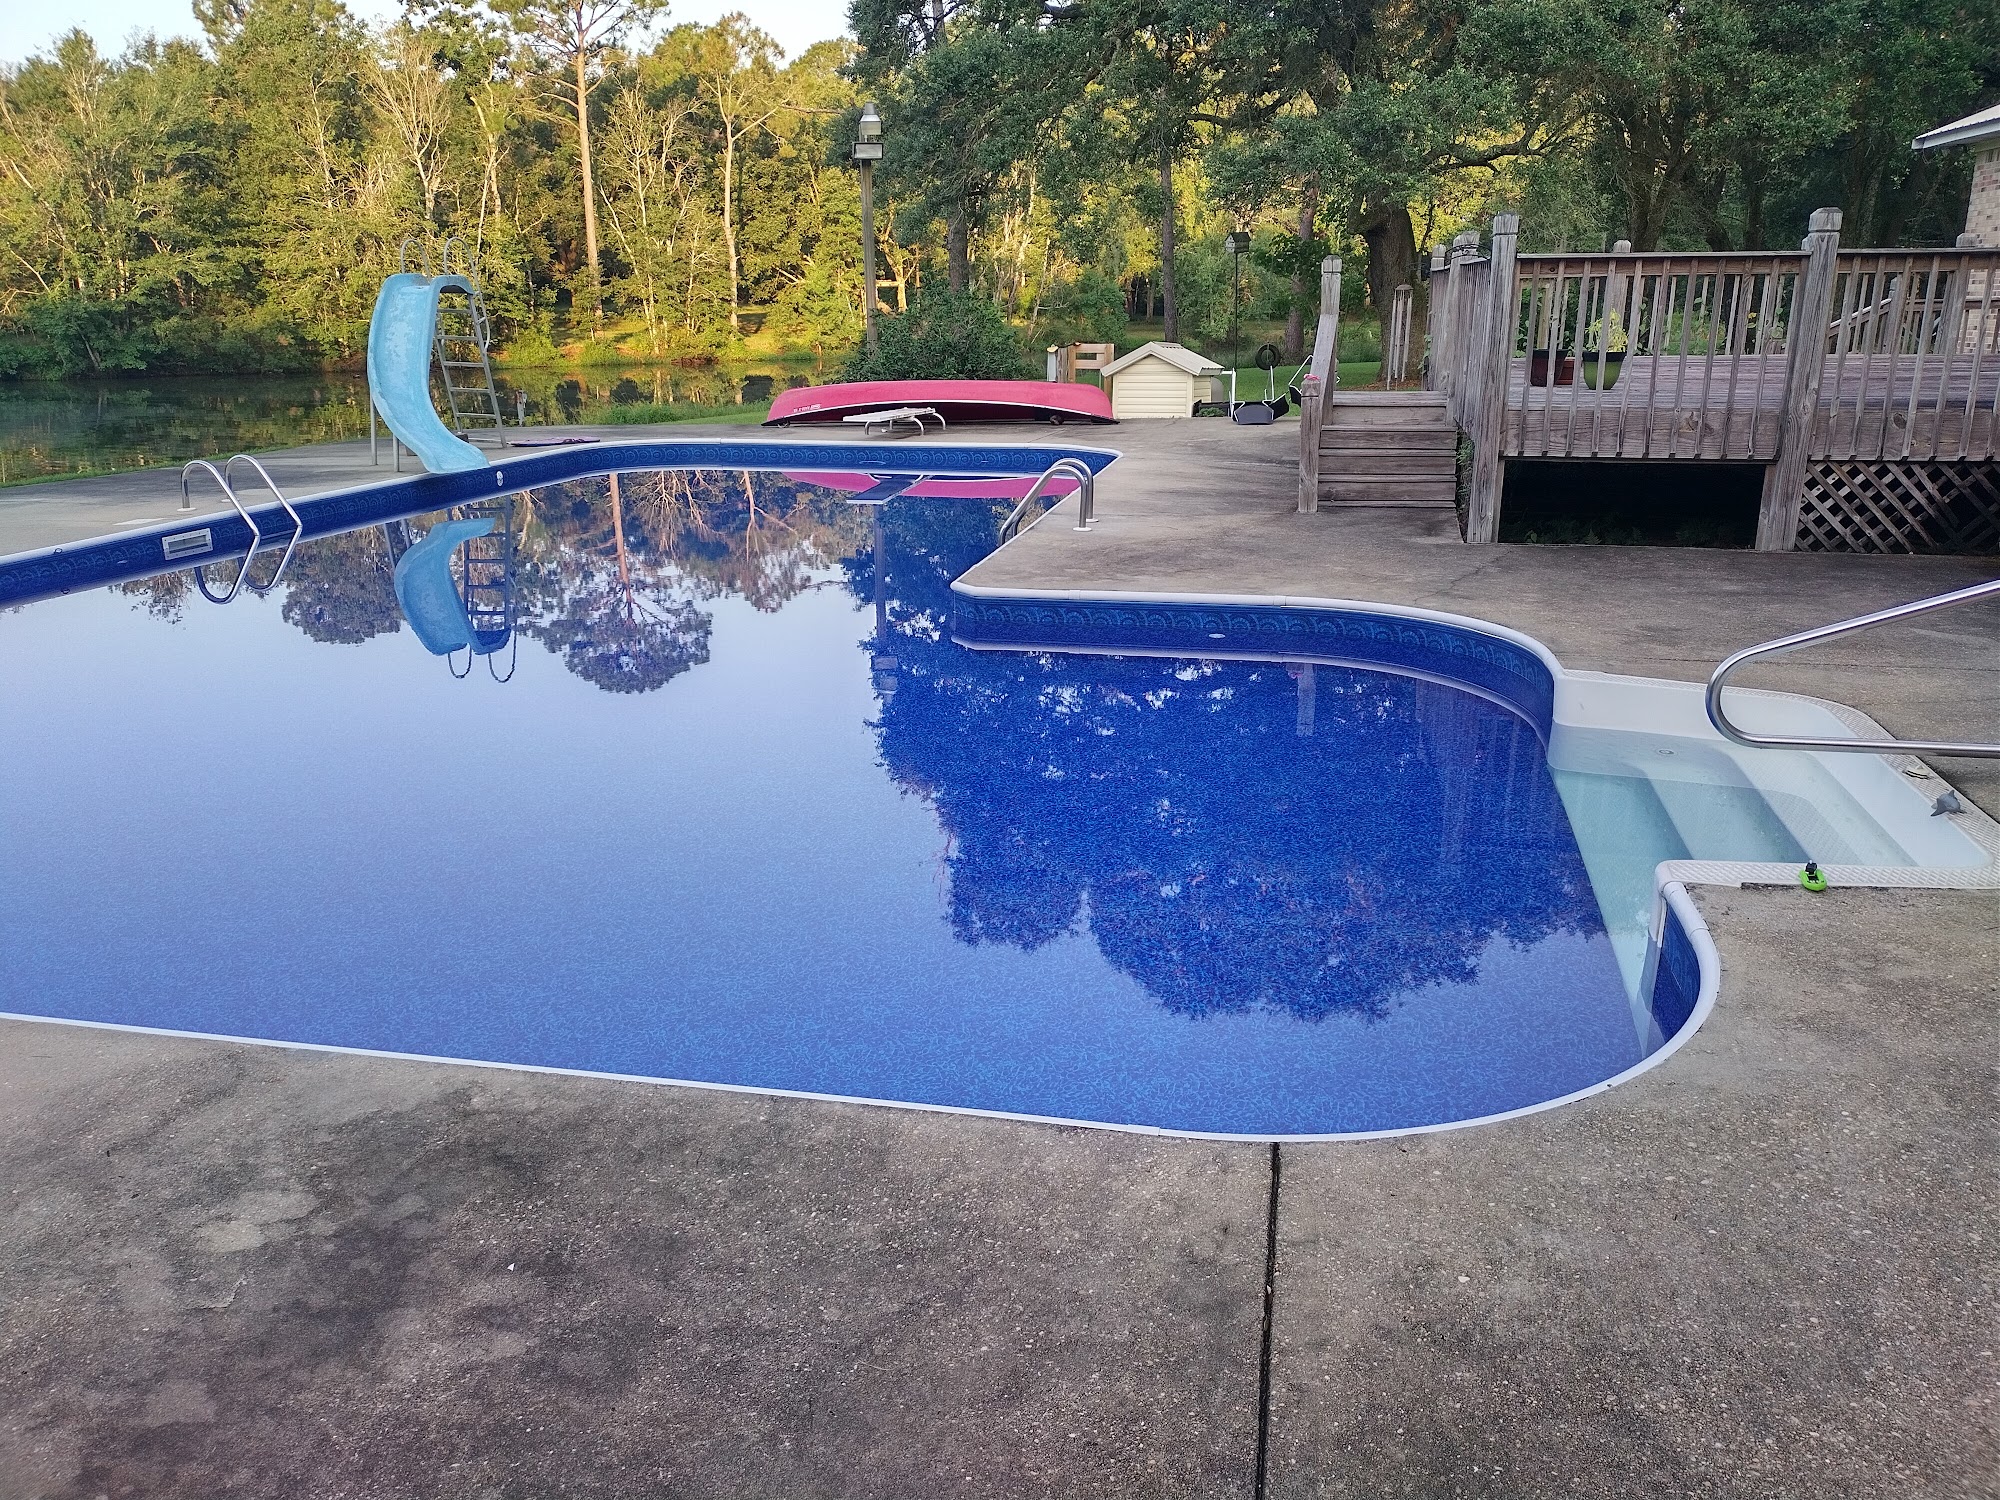 Professional Pool Builders Semmes Alabama 36575